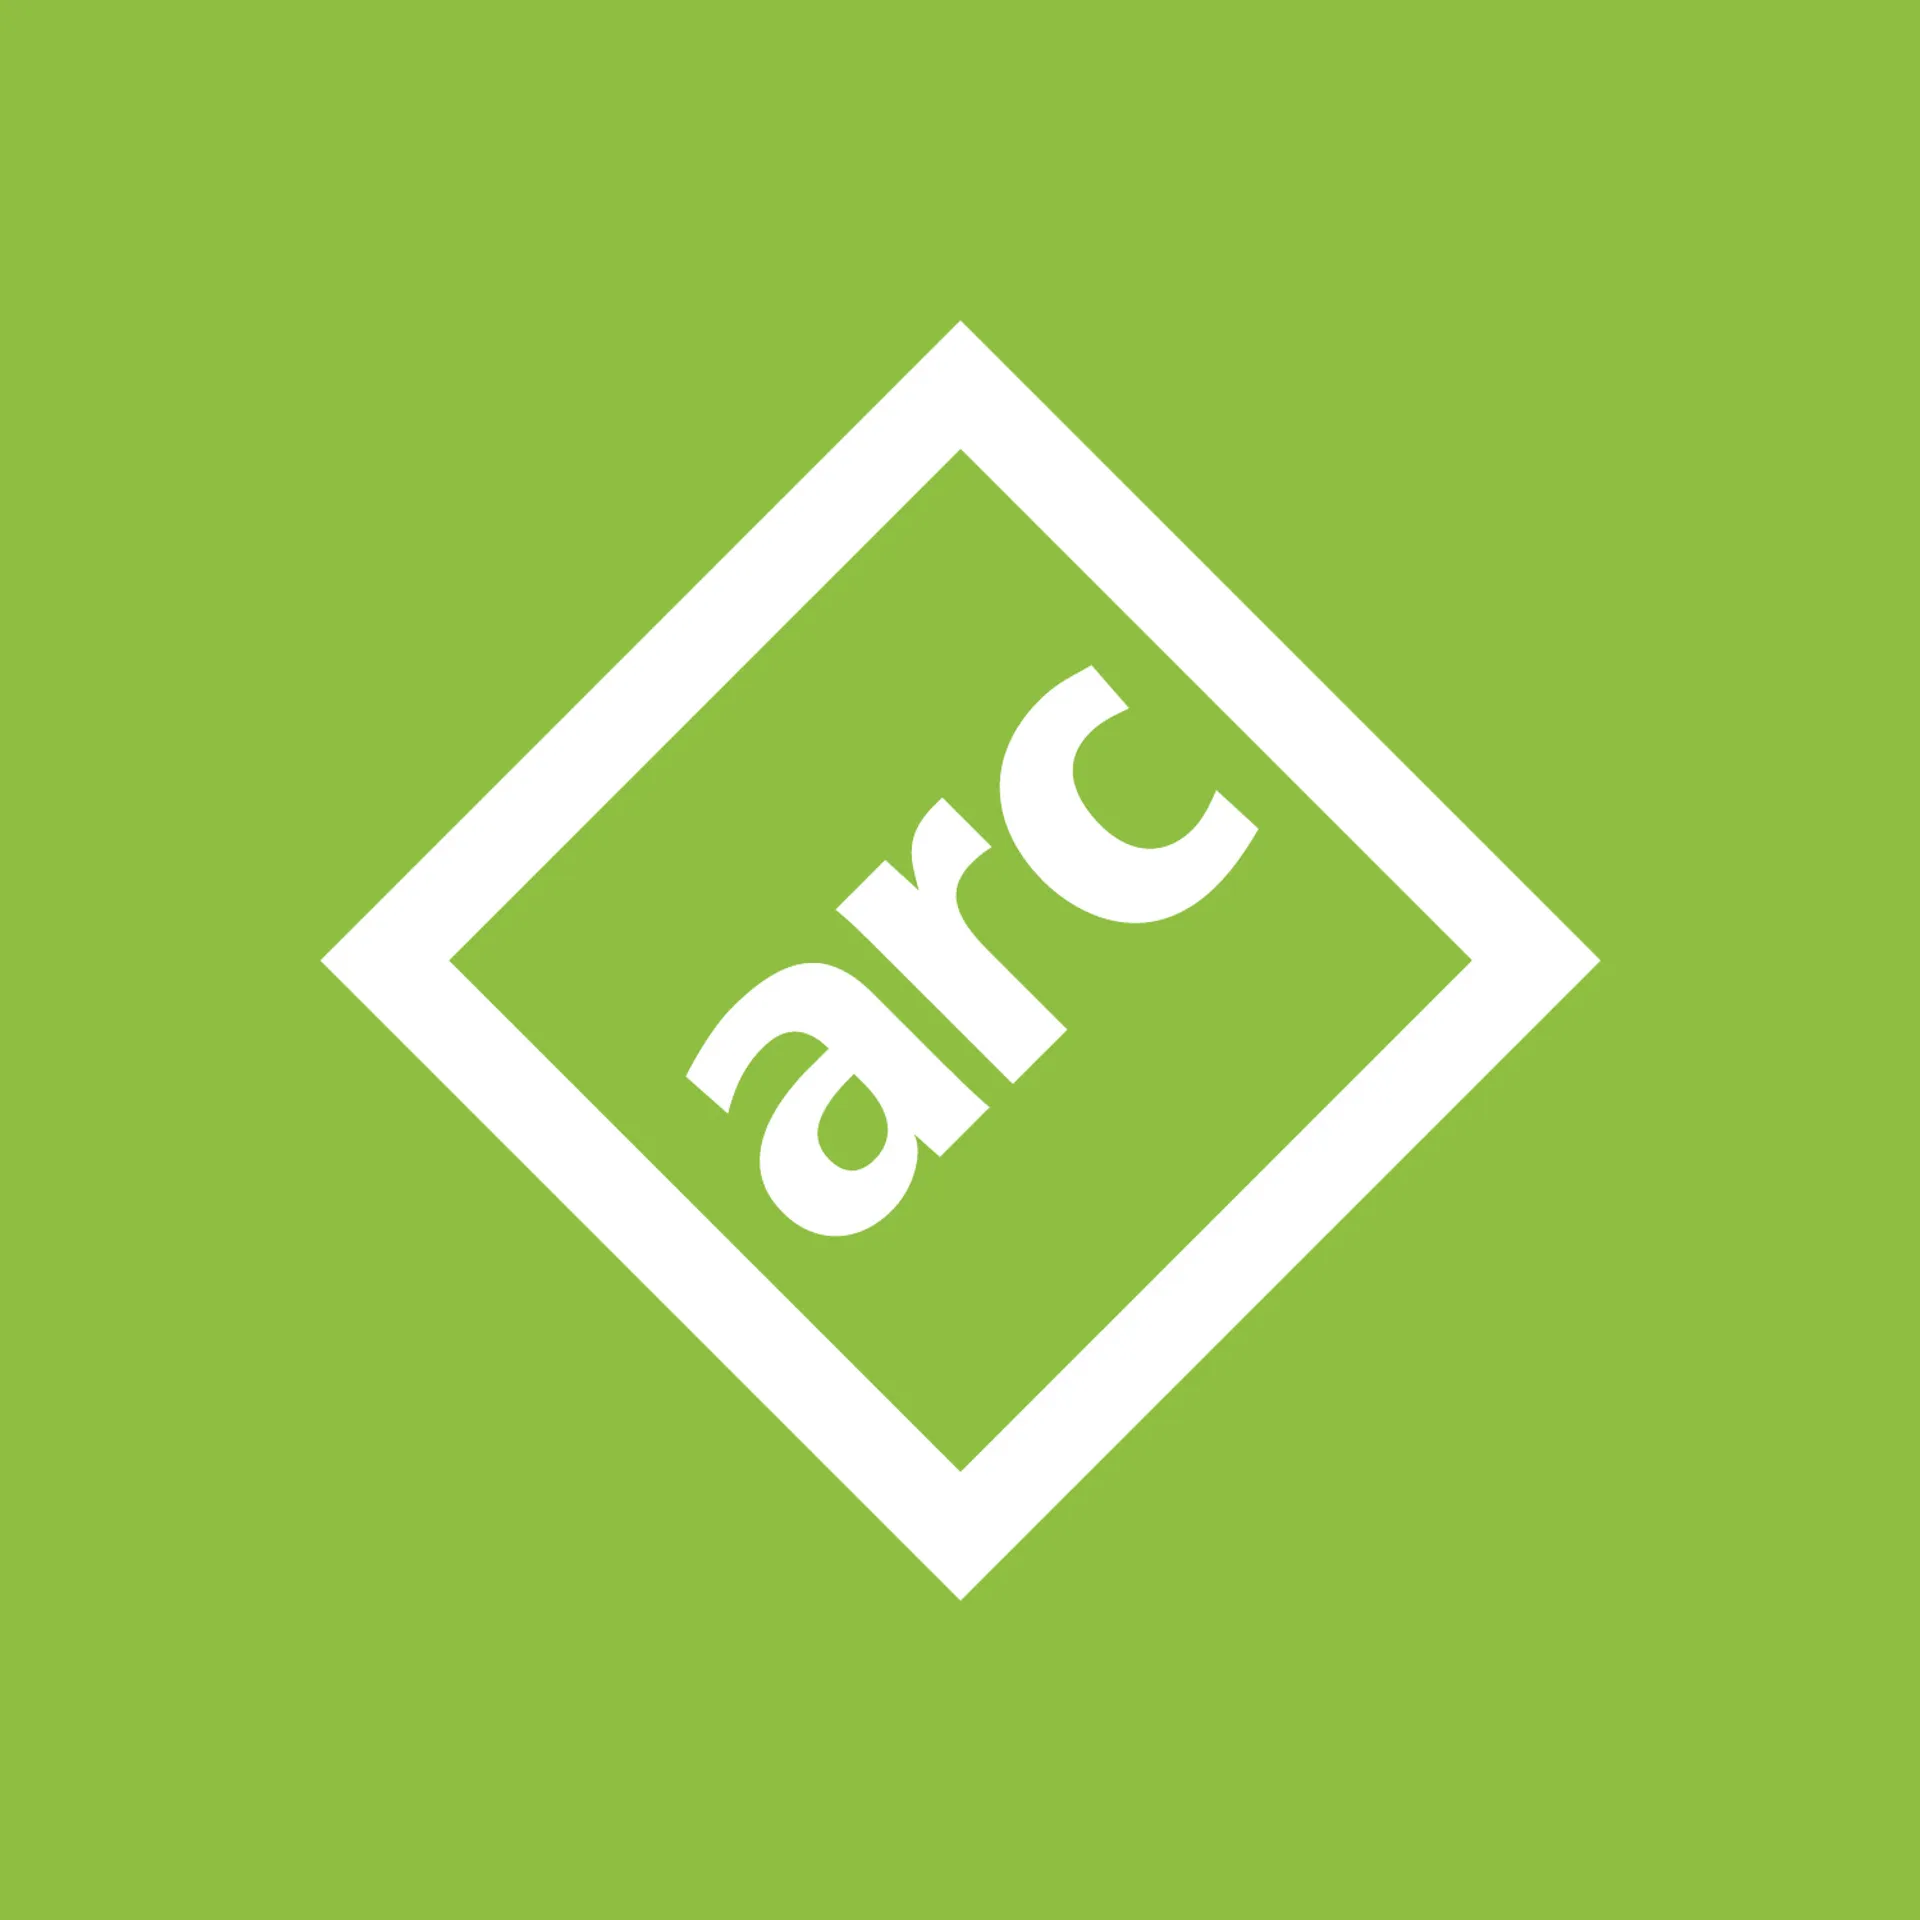 ARC Logo on green background